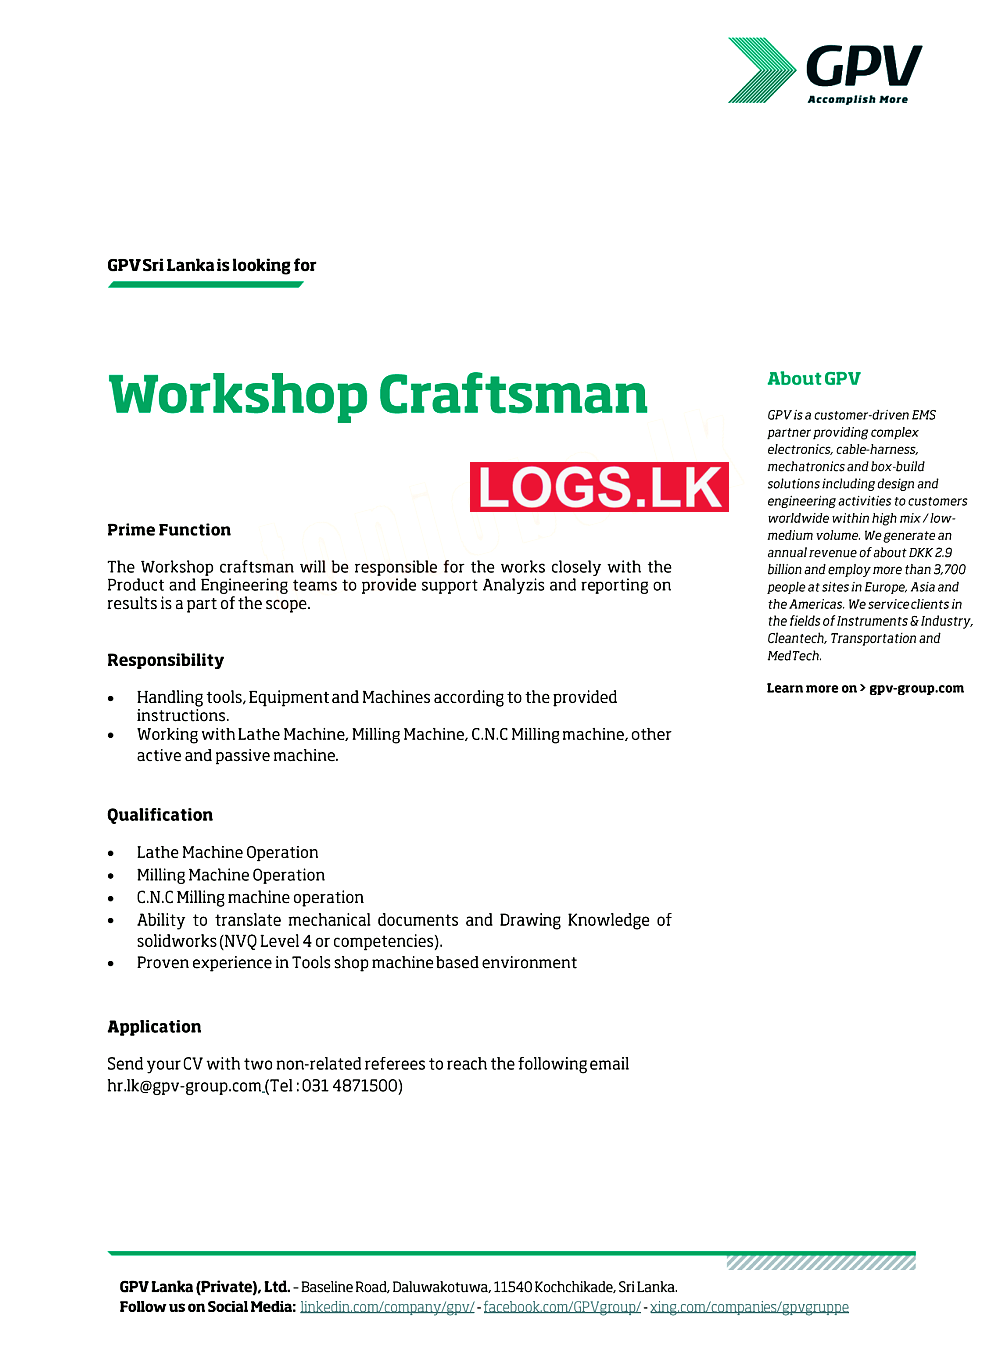 Workshop Craftsman Vacancy at GPV Lanka Job Vacancies